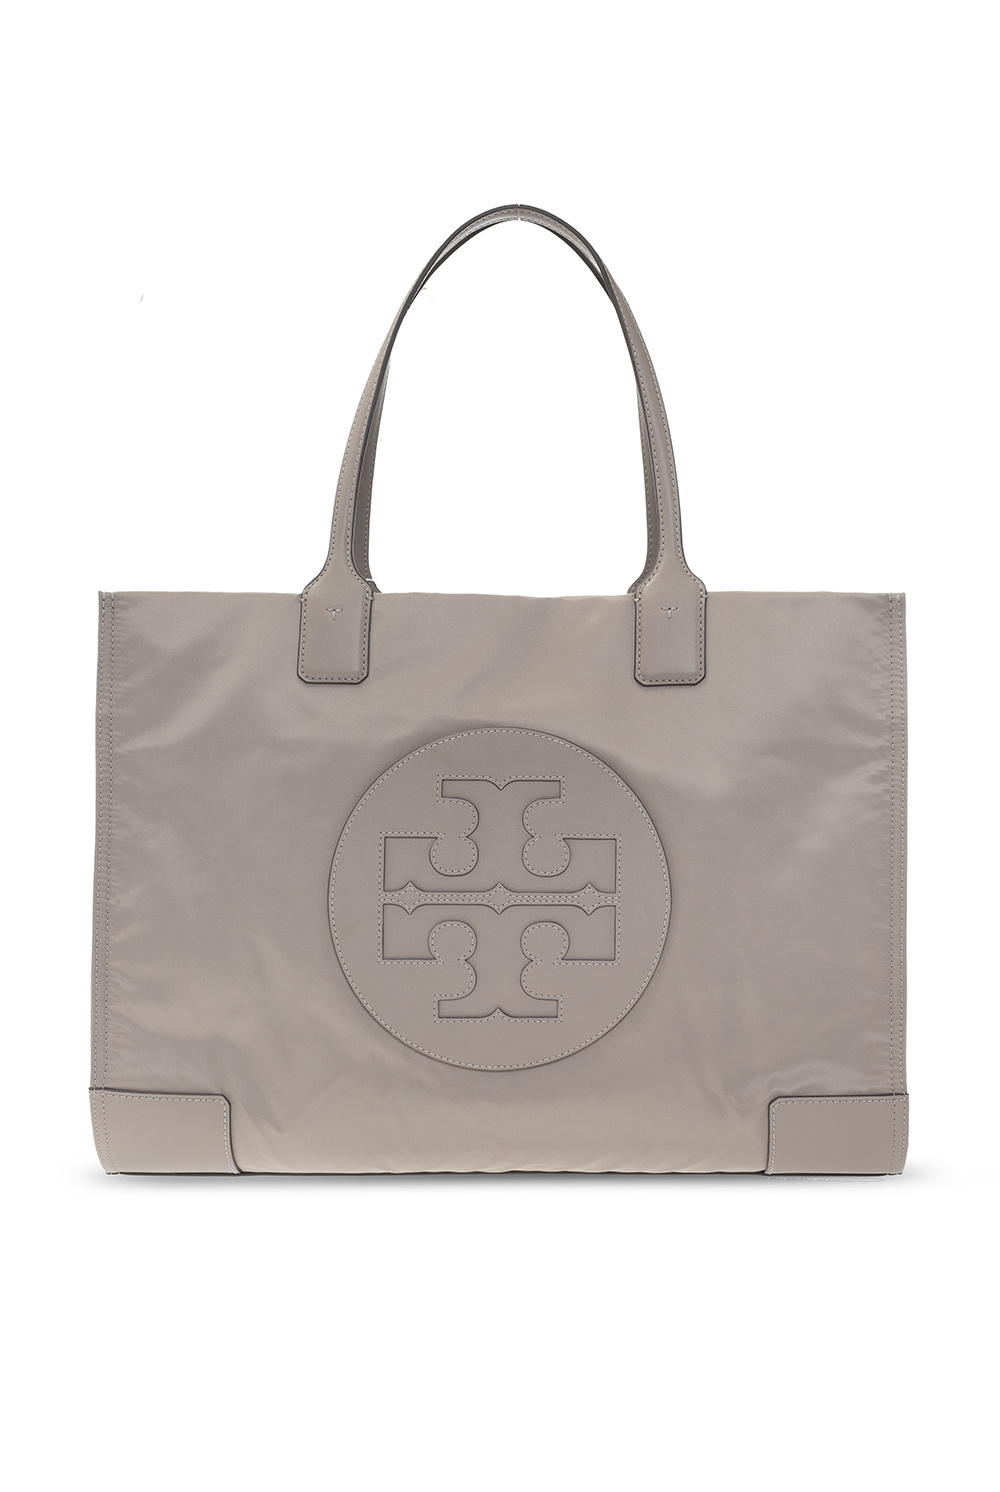 Grey ‘Ella’ shopper bag Tory Burch - Vitkac Germany